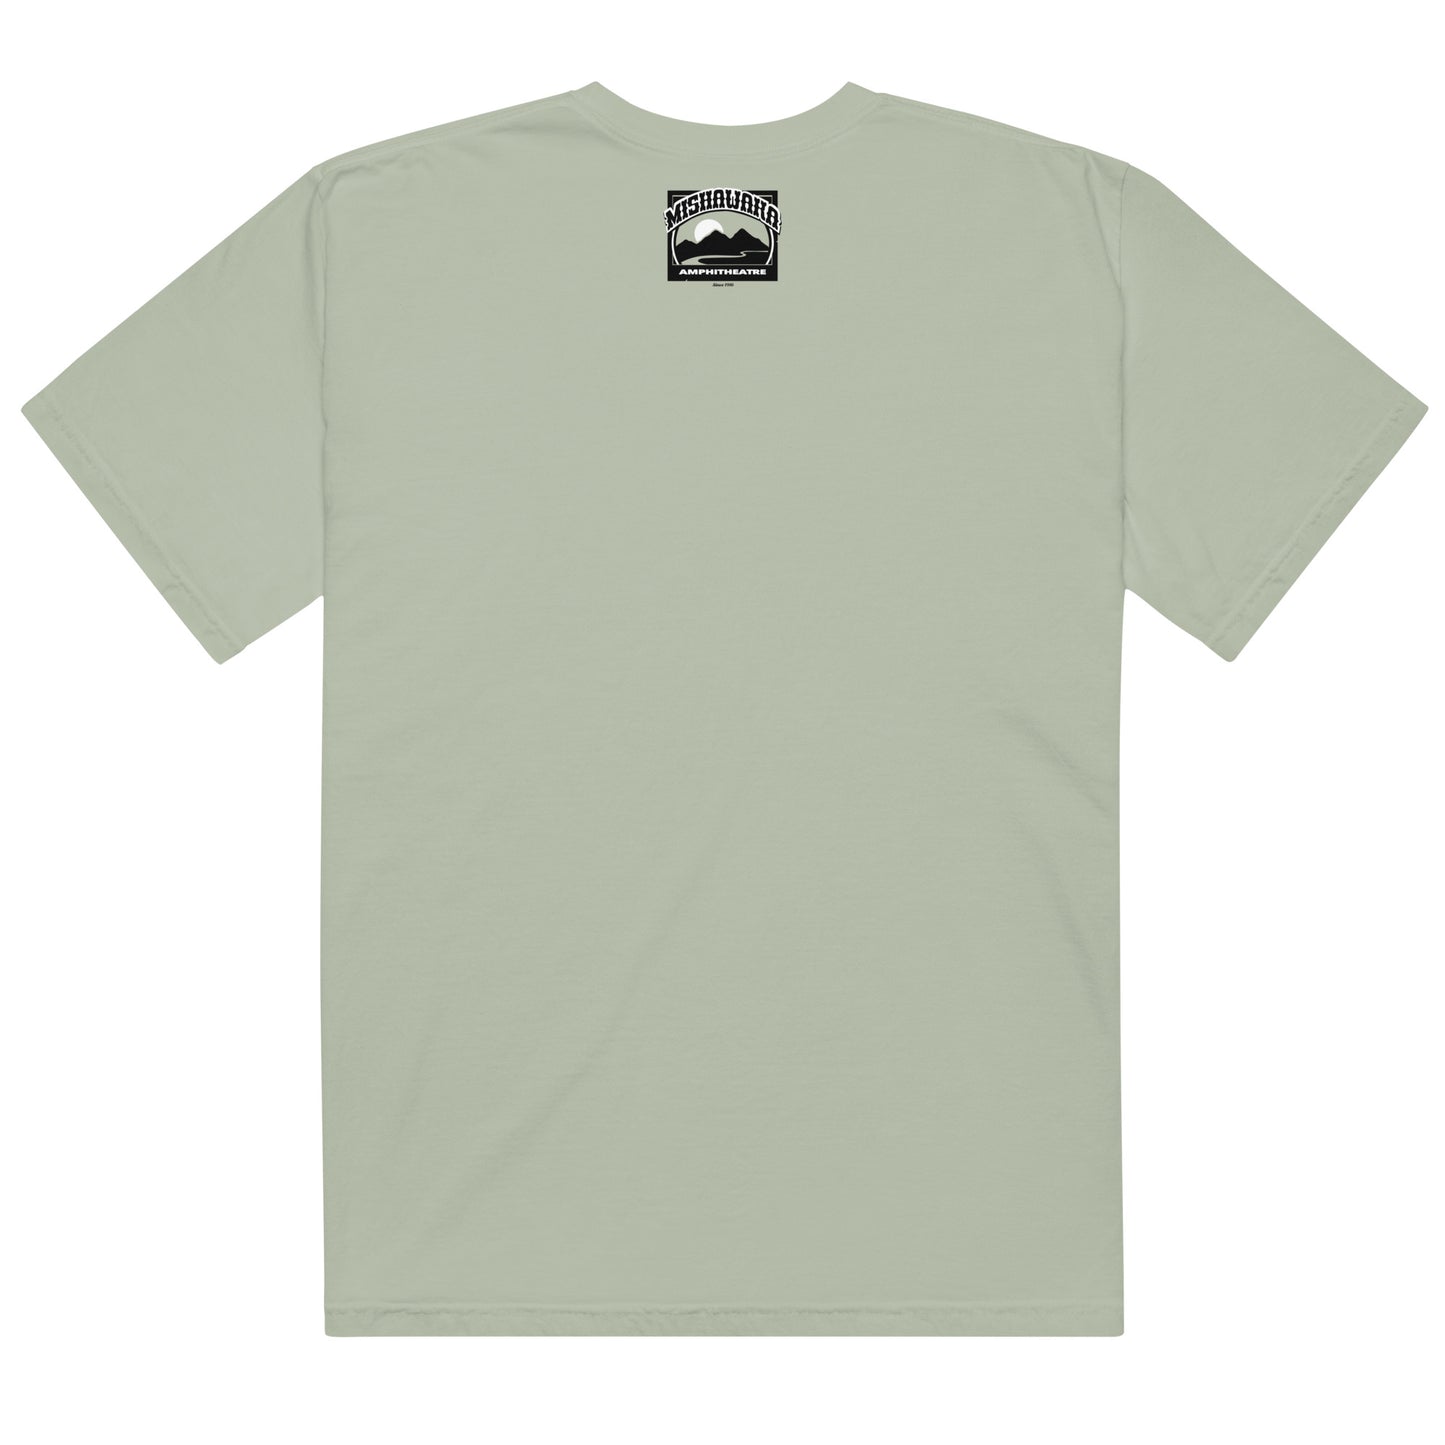 The Mish Wood Unisex T-Shirt